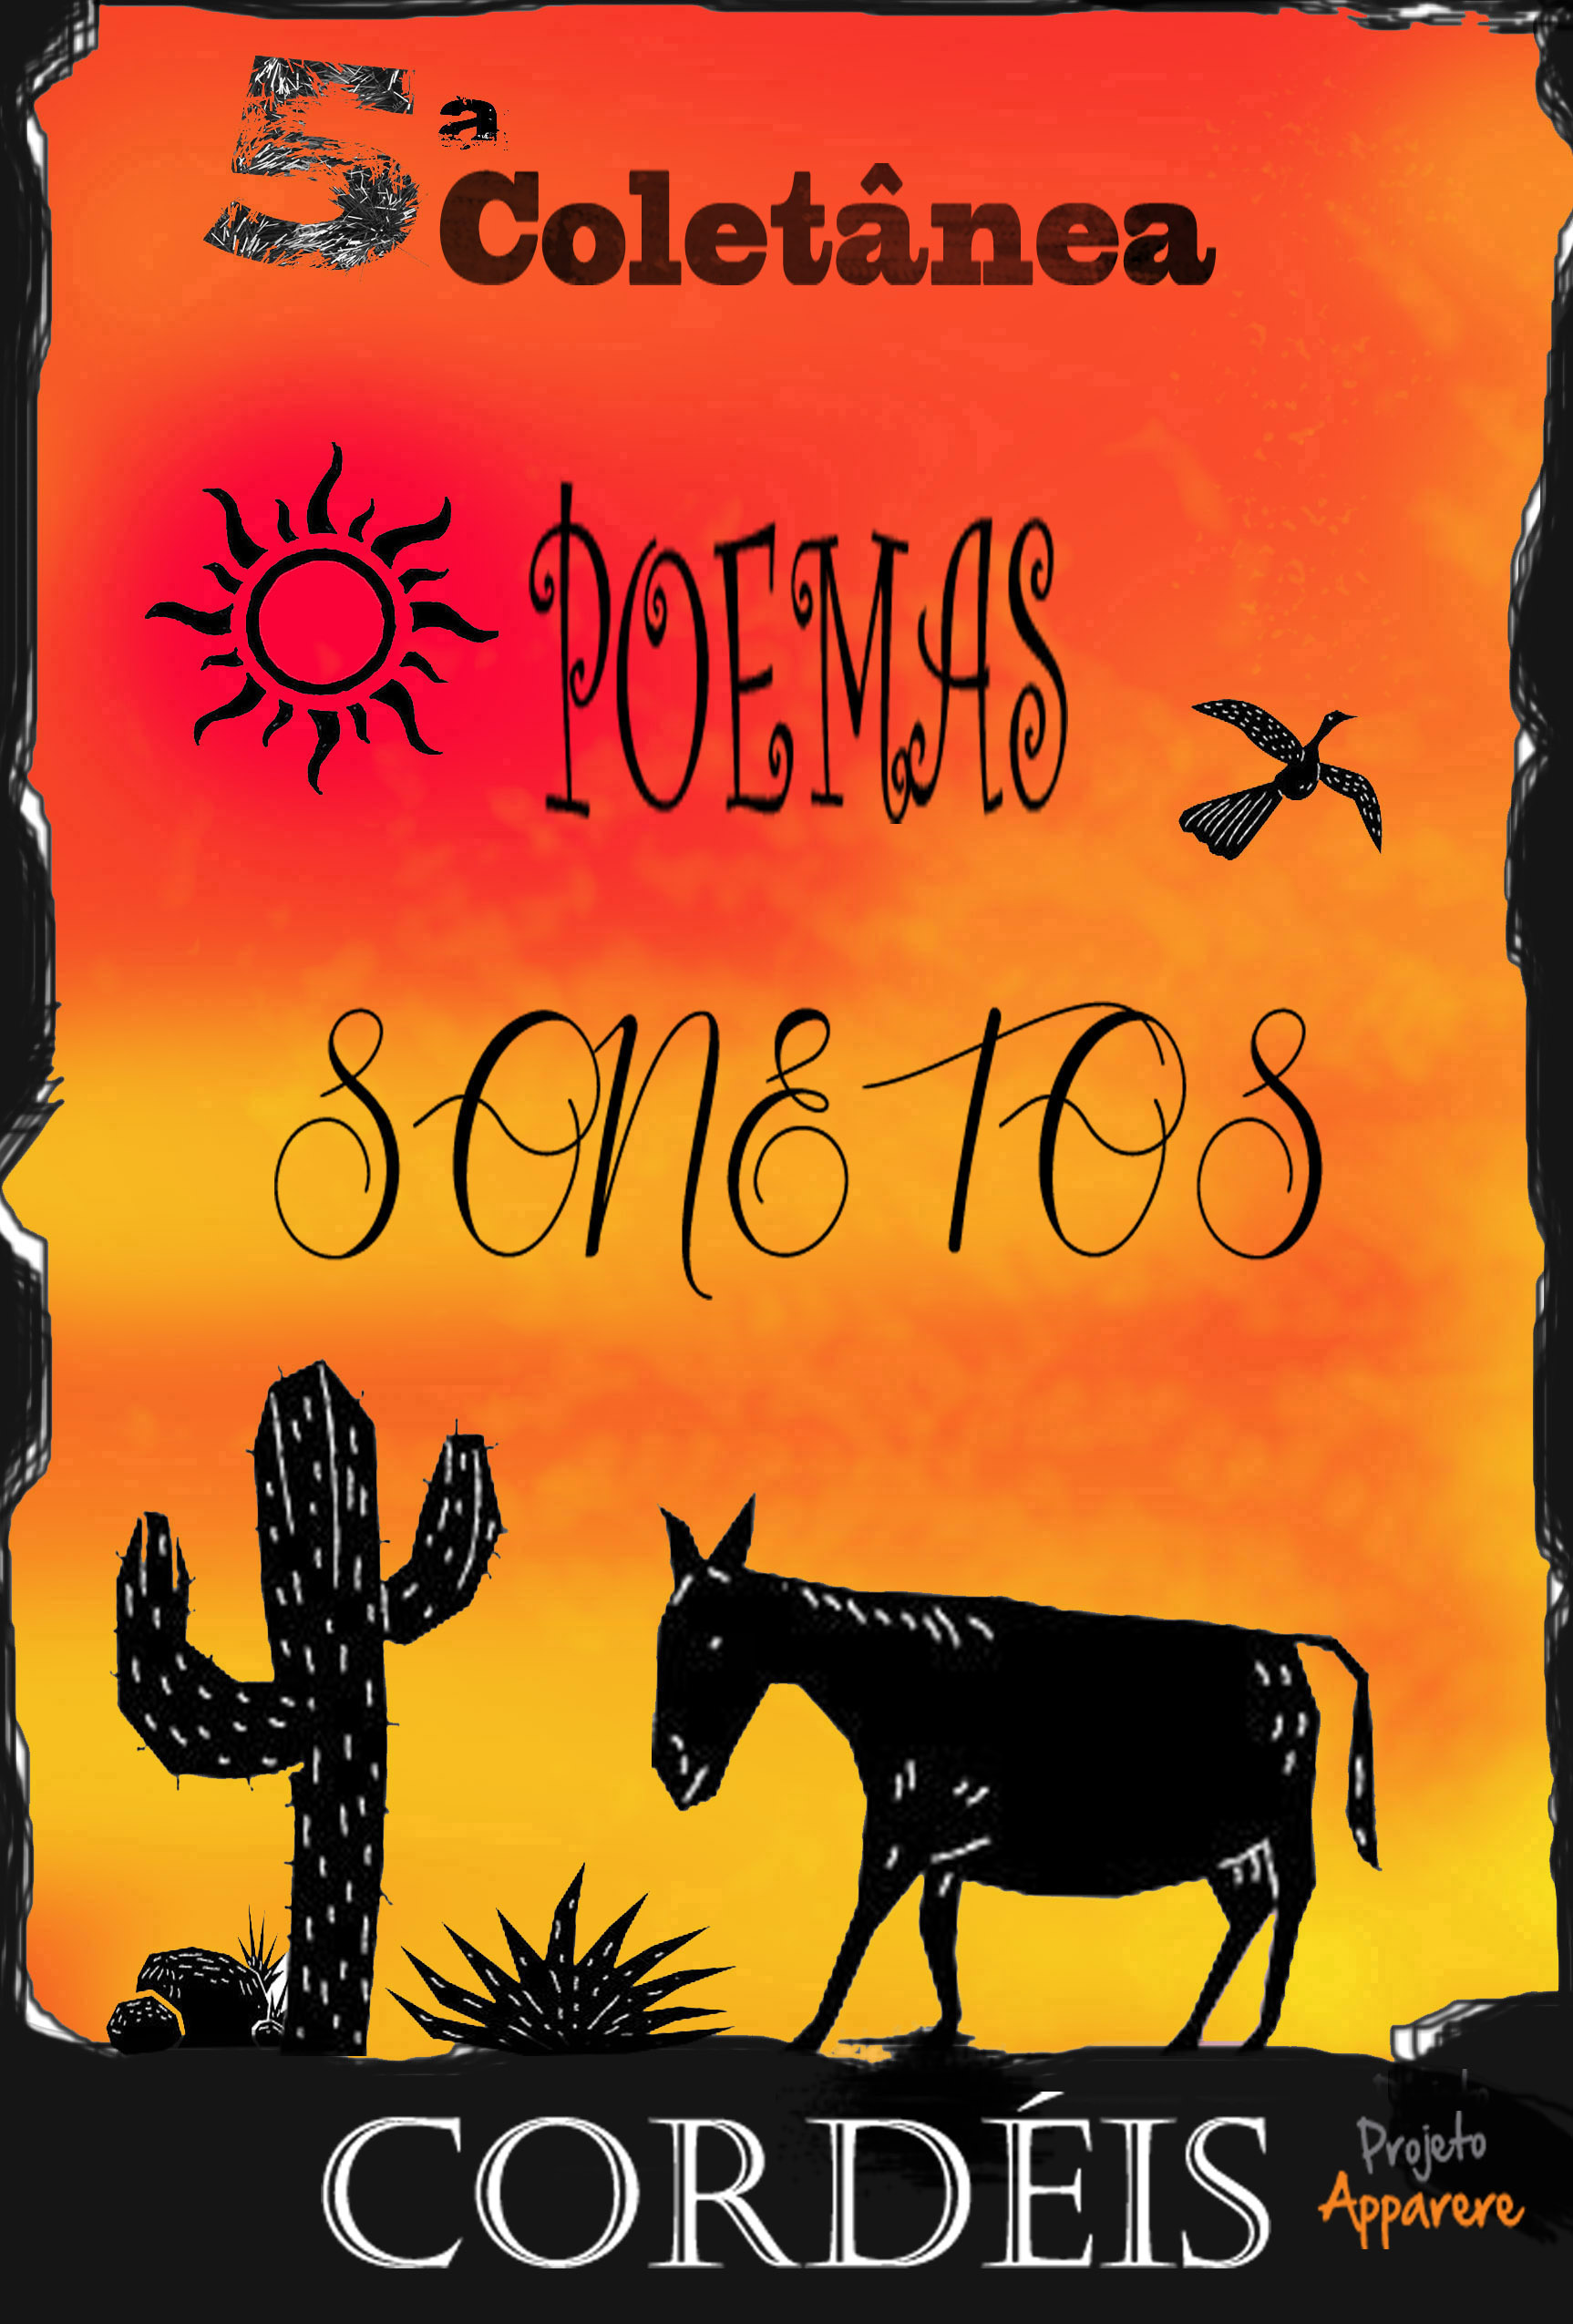 Bienal Internacional de Poesia de Oeiras